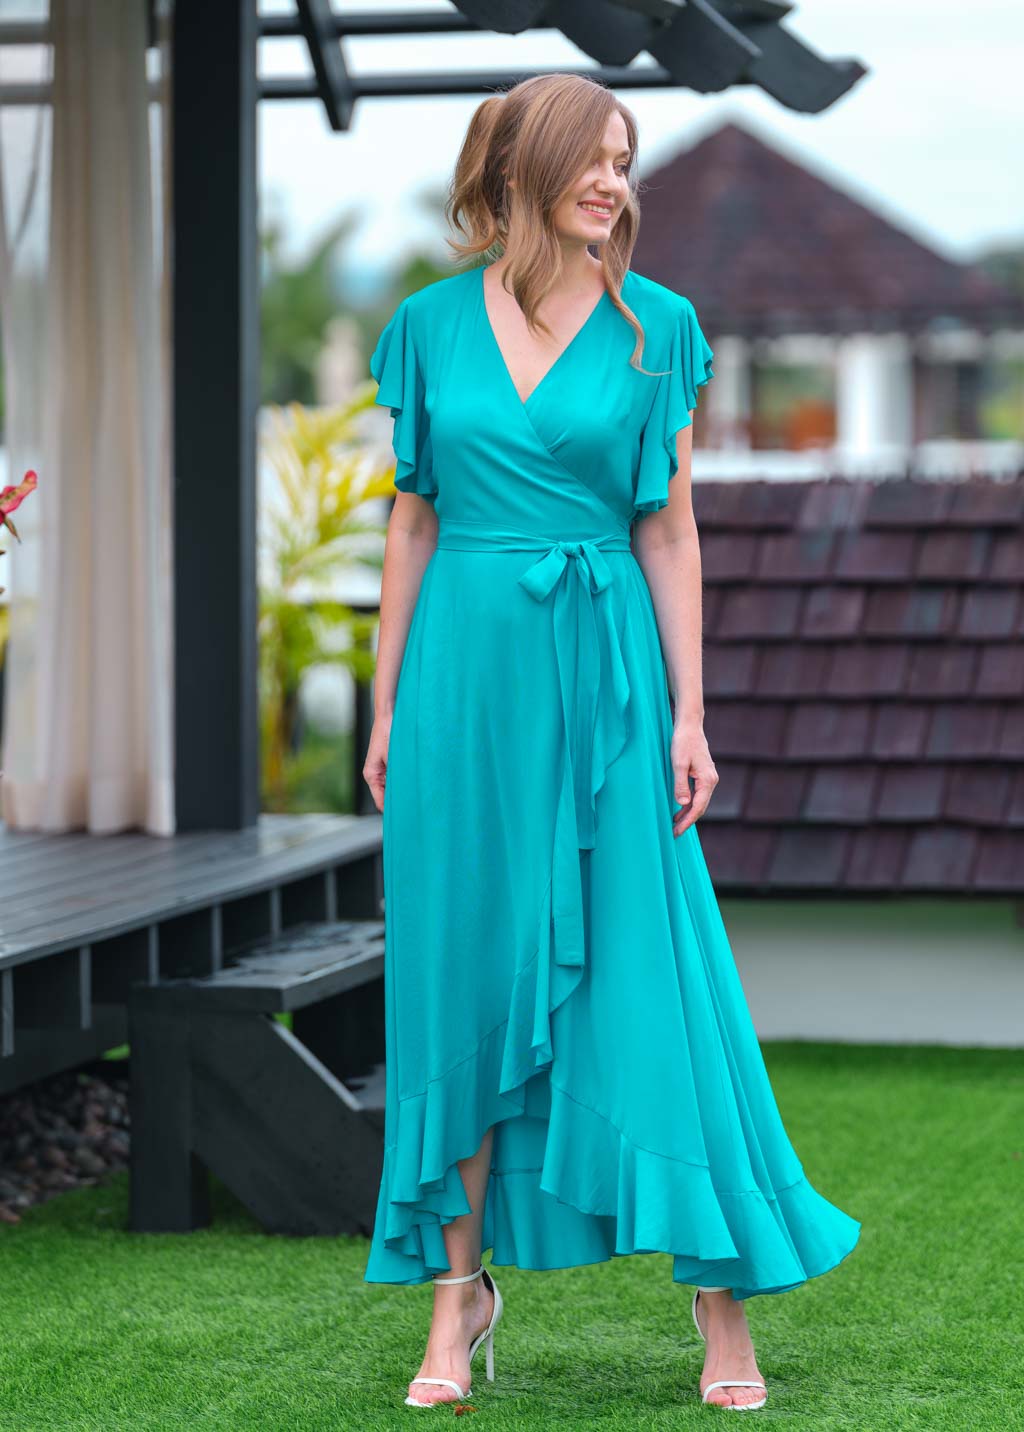 Turquoise romantic wrap dress